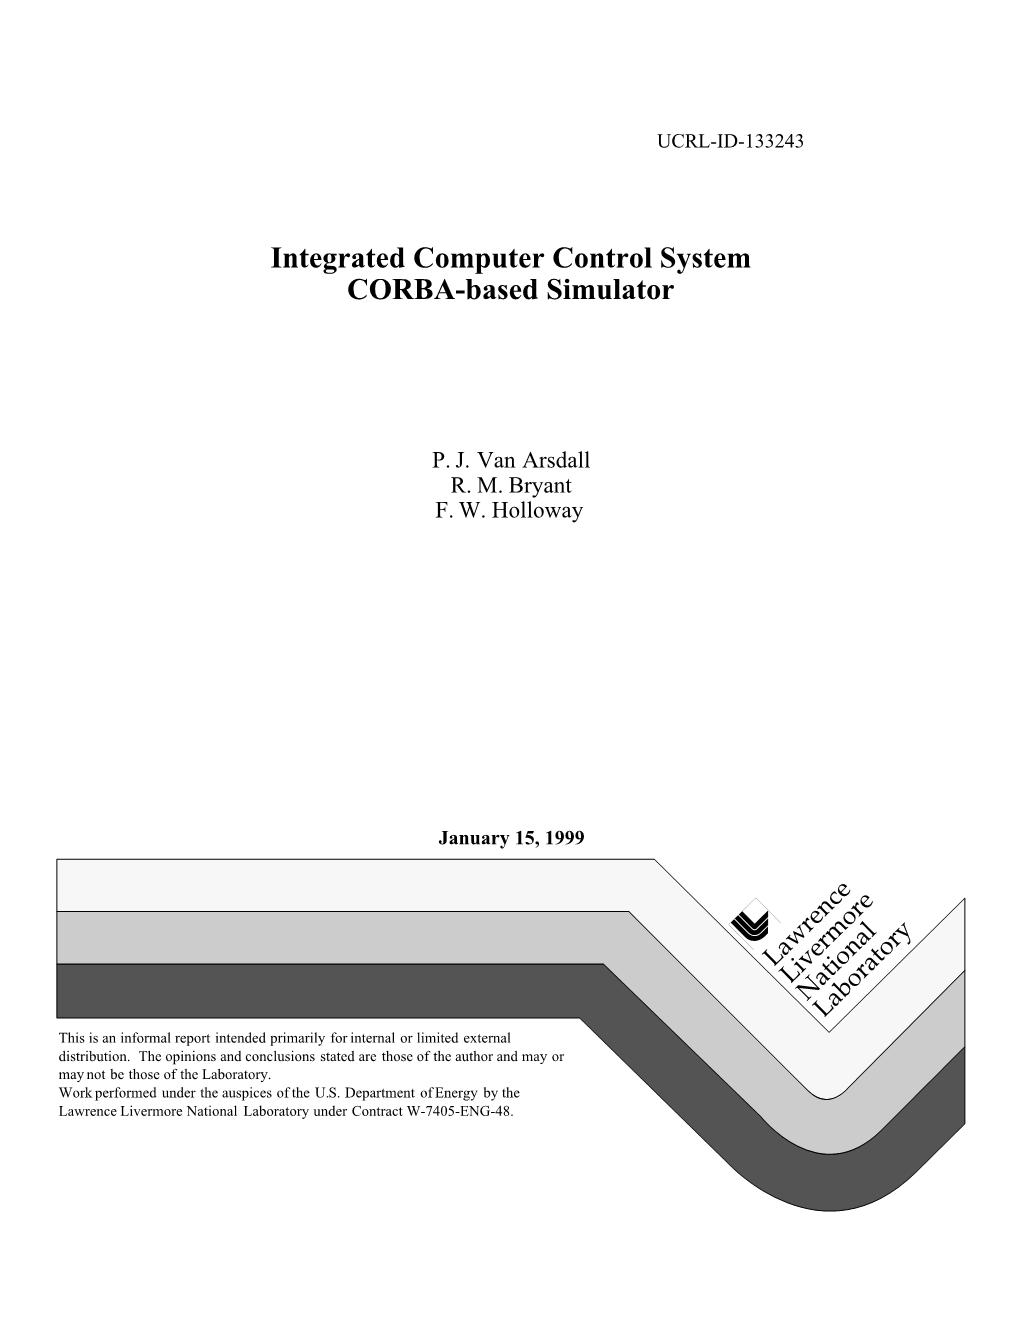 Integrated Computer Control System CORBA-Based Simulator